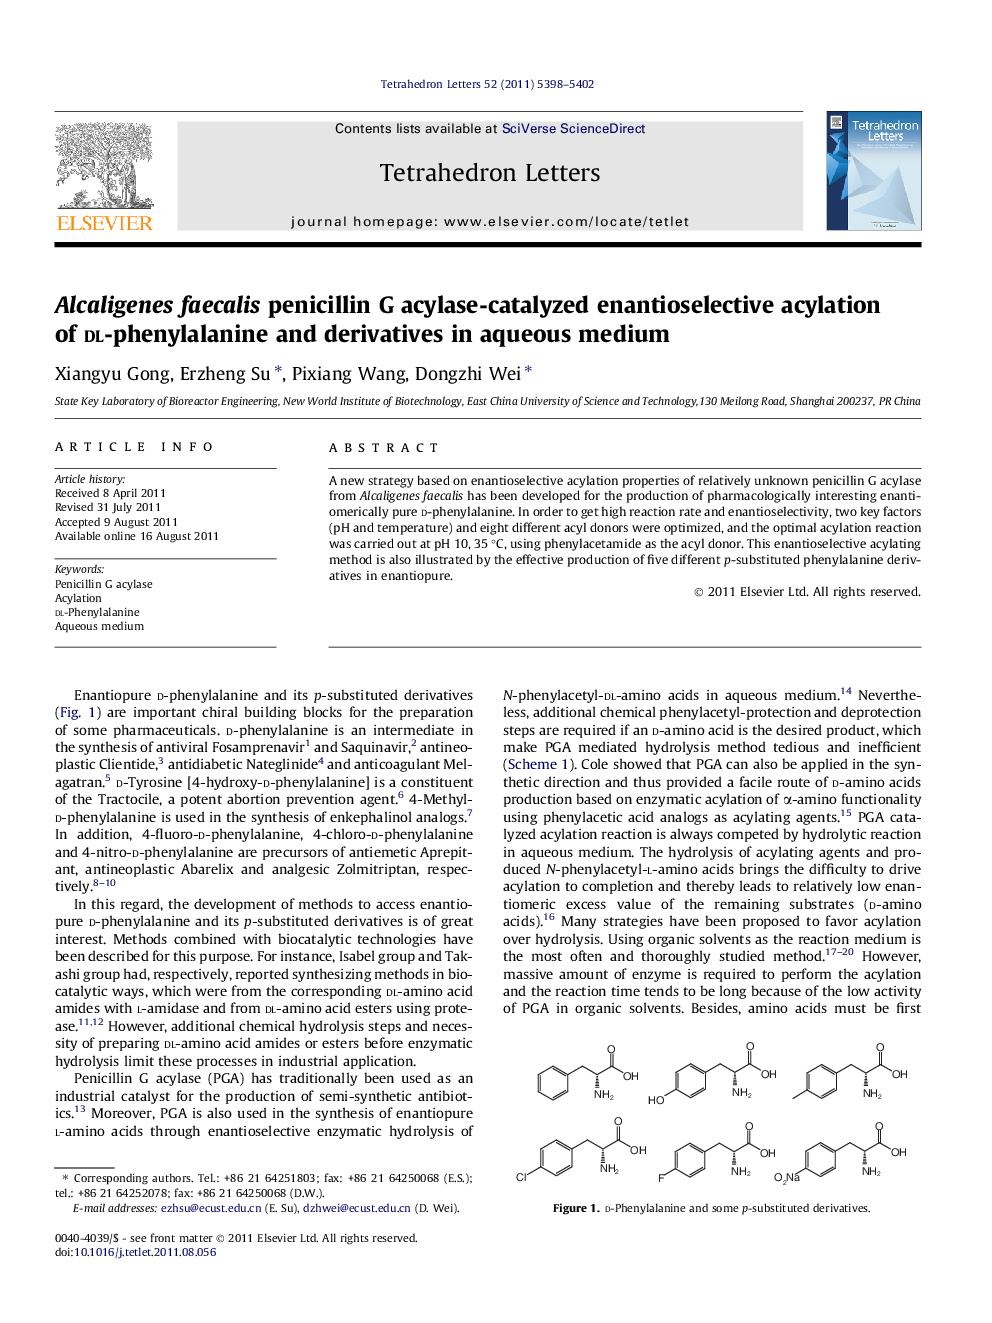 Alcaligenes faecalis penicillin G acylase-catalyzed enantioselective acylation of dl-phenylalanine and derivatives in aqueous medium